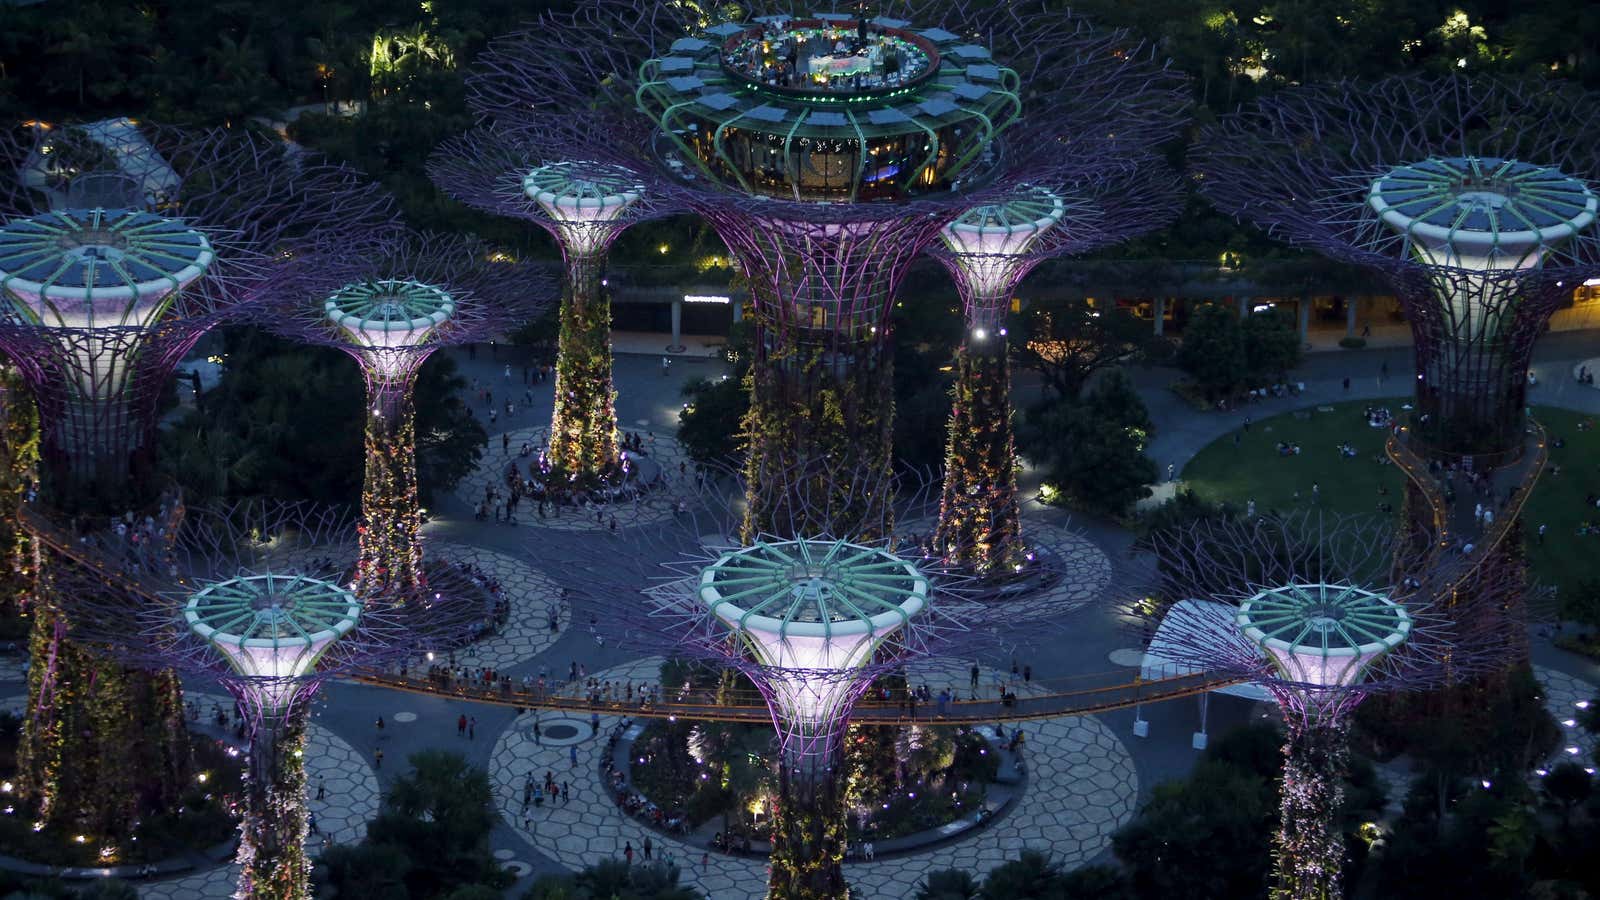 Solar-power “trees” in Singapore.